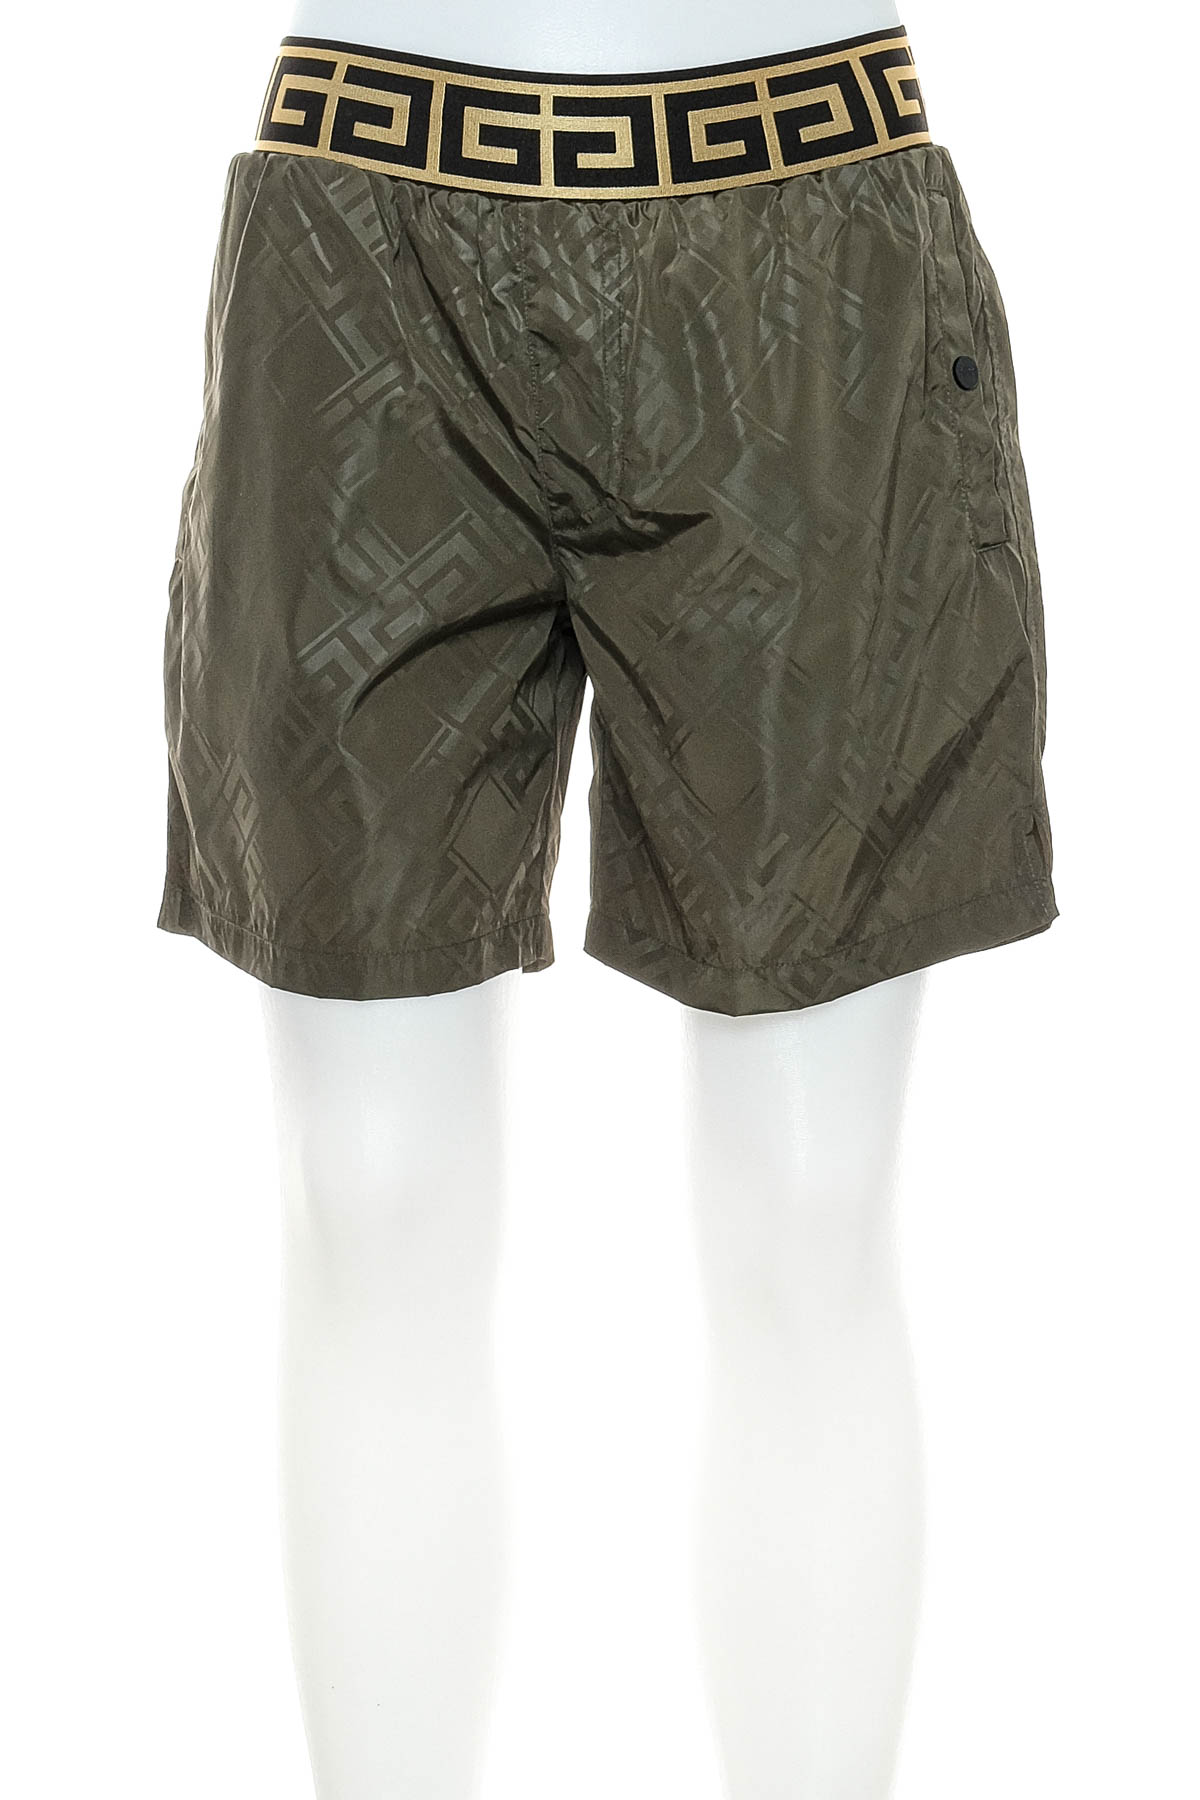 Men's shorts - GLORIOUS GANGSTA - 0